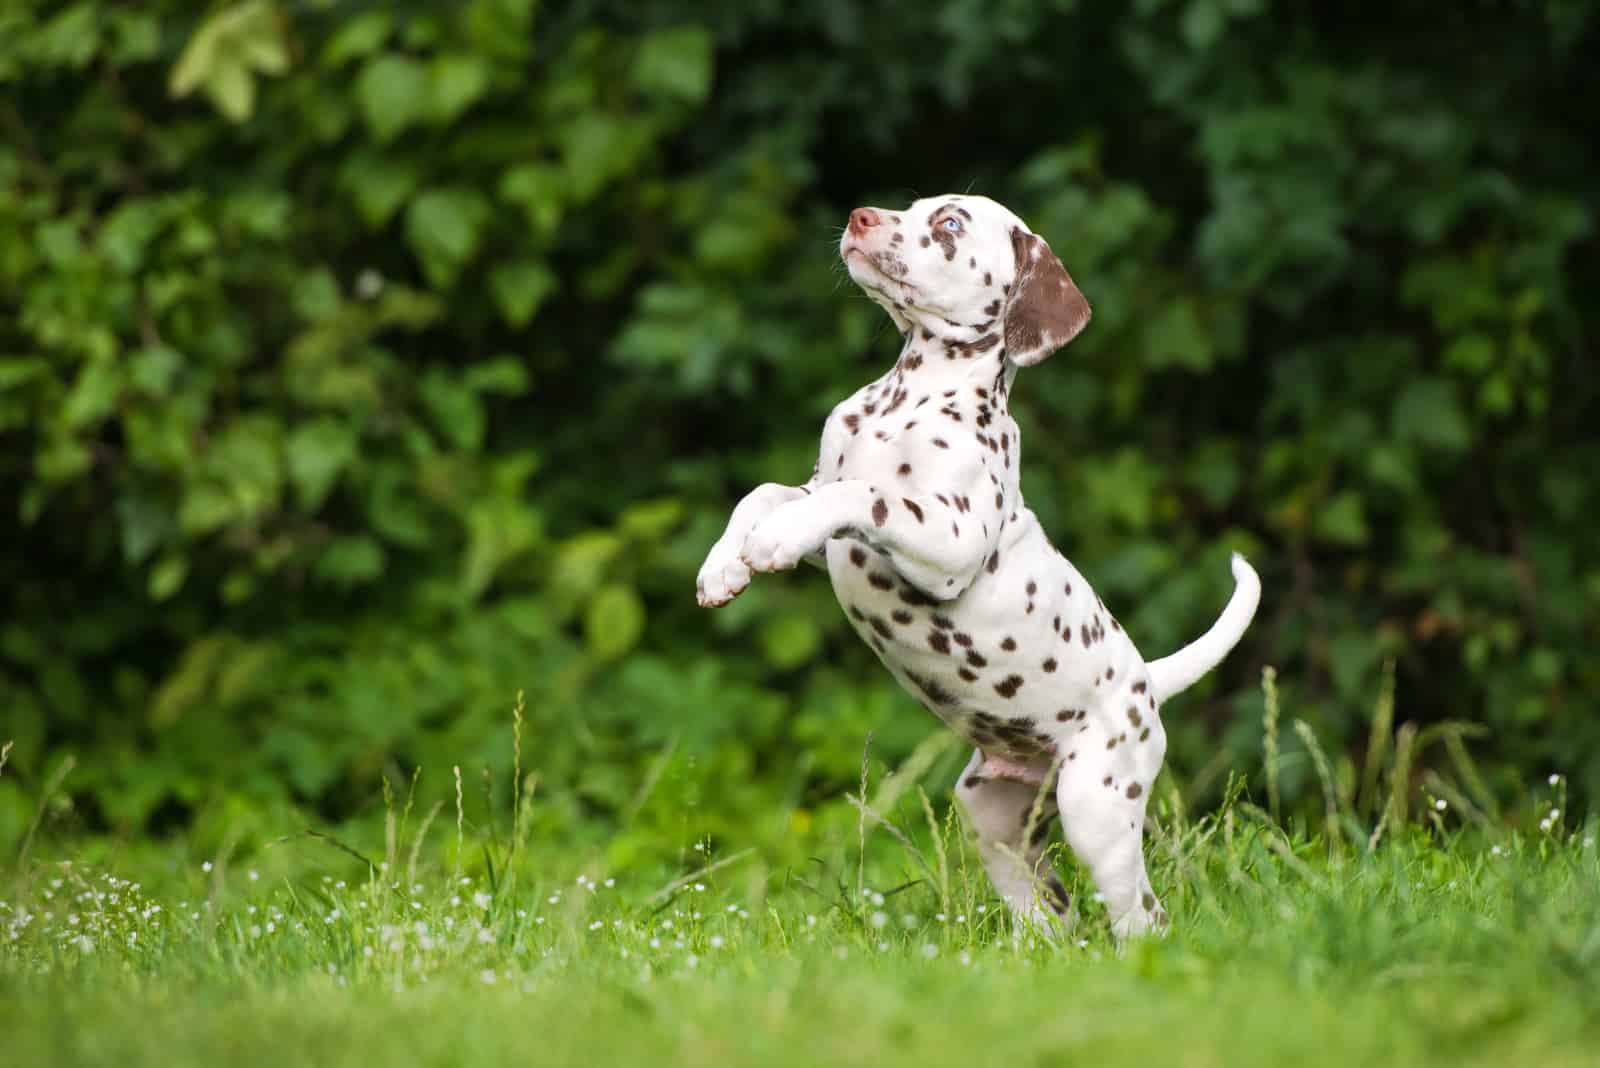 Dalmatian puppy jumping